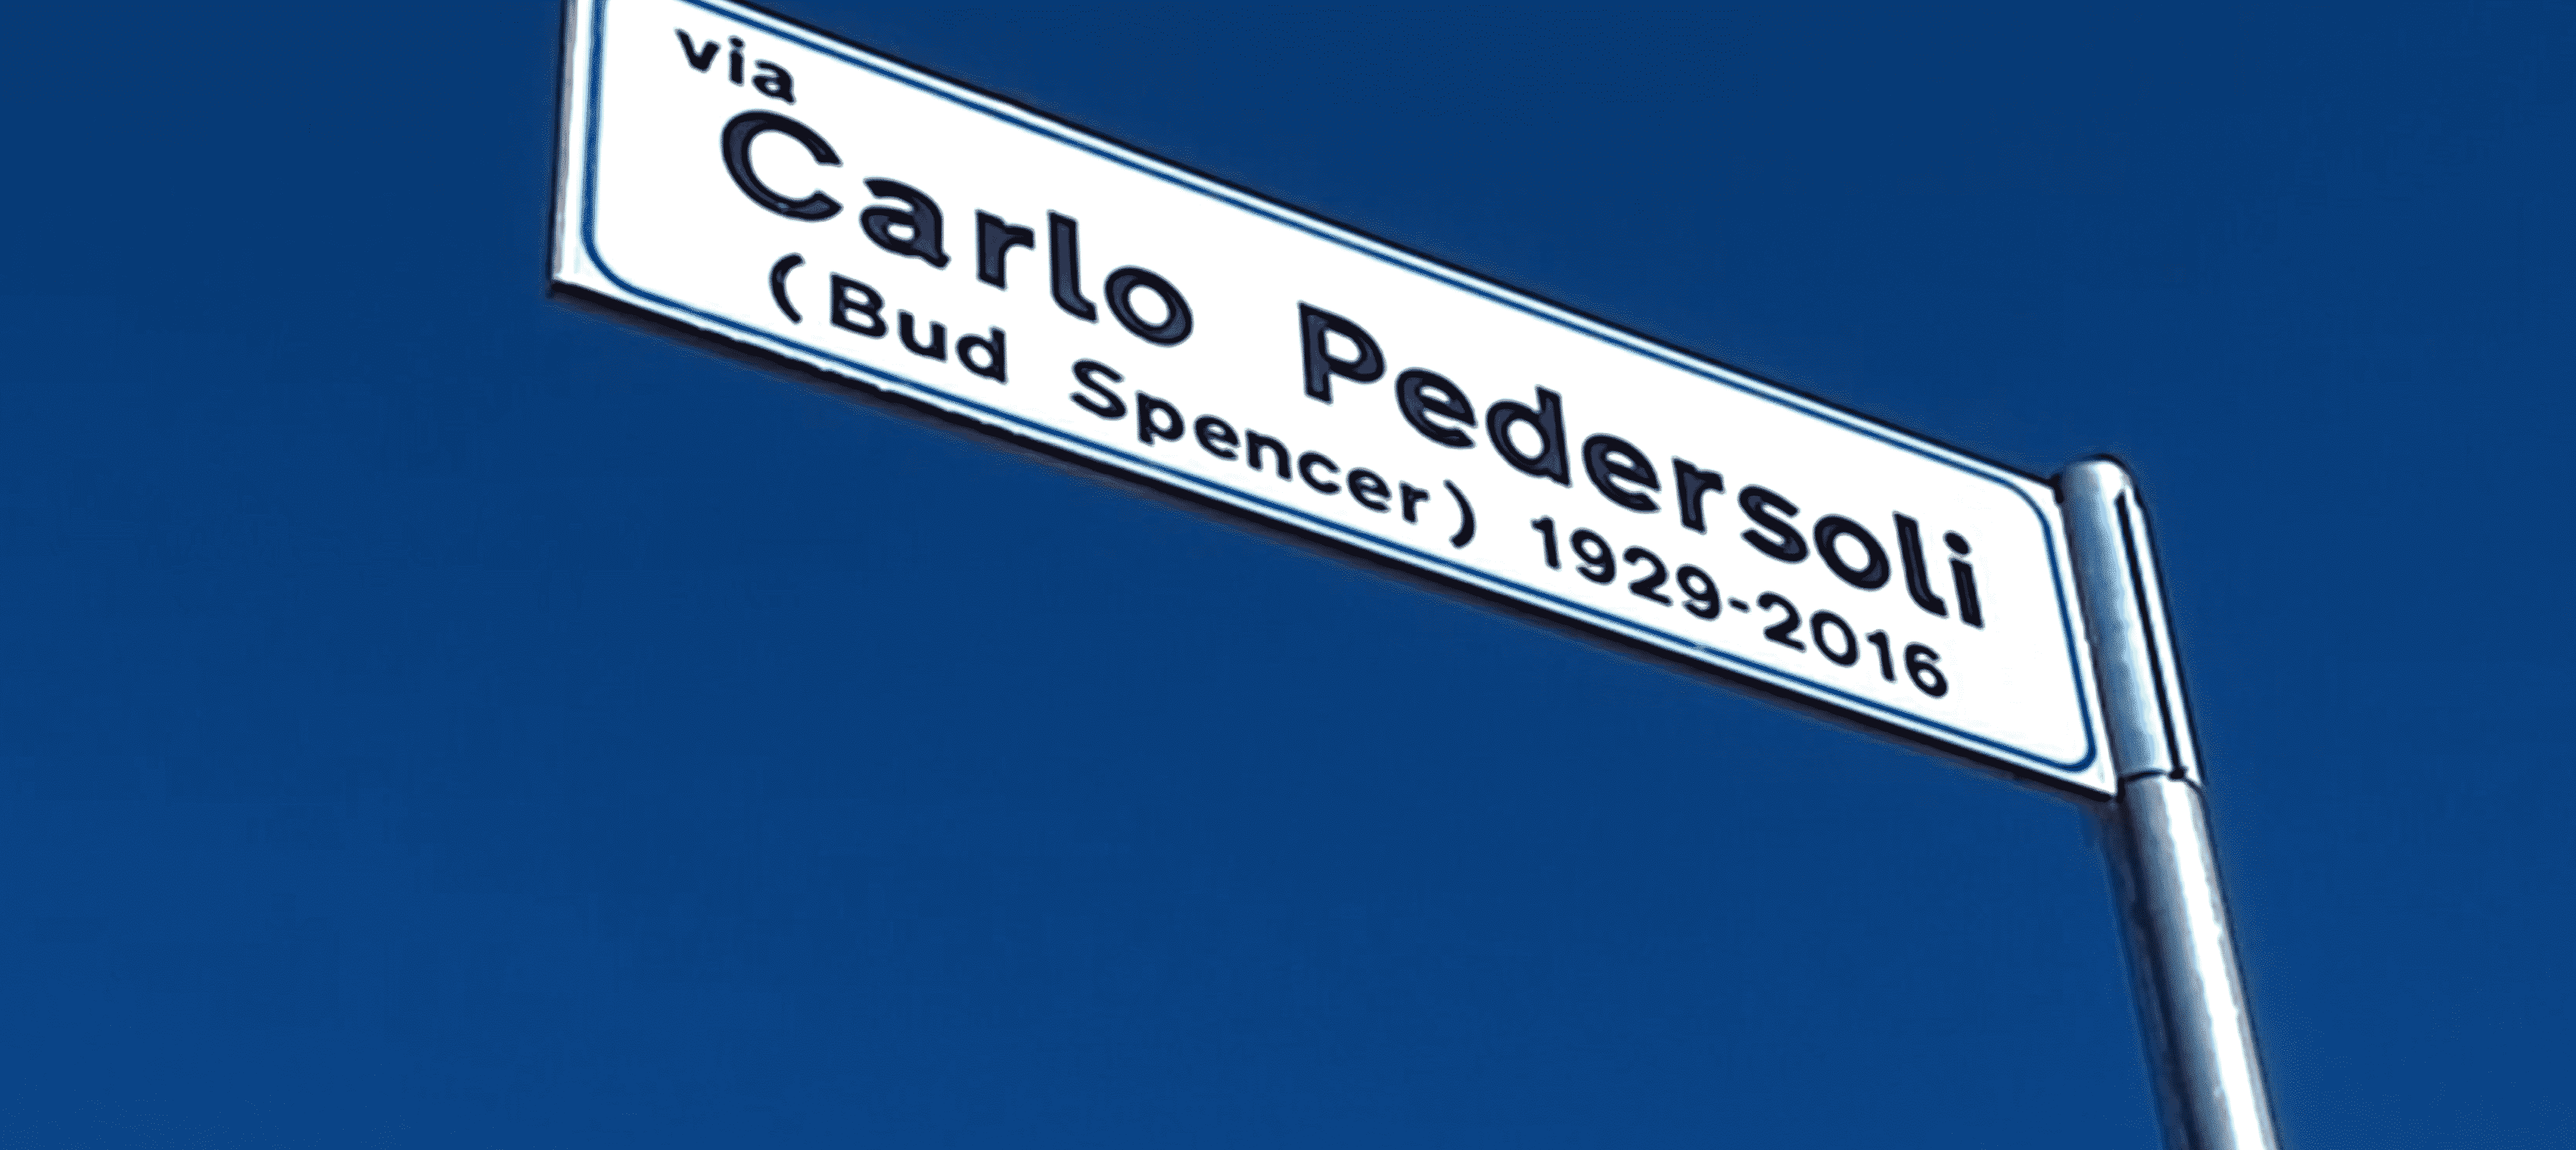 carlo-pedersoli-bud-spencer-strasse